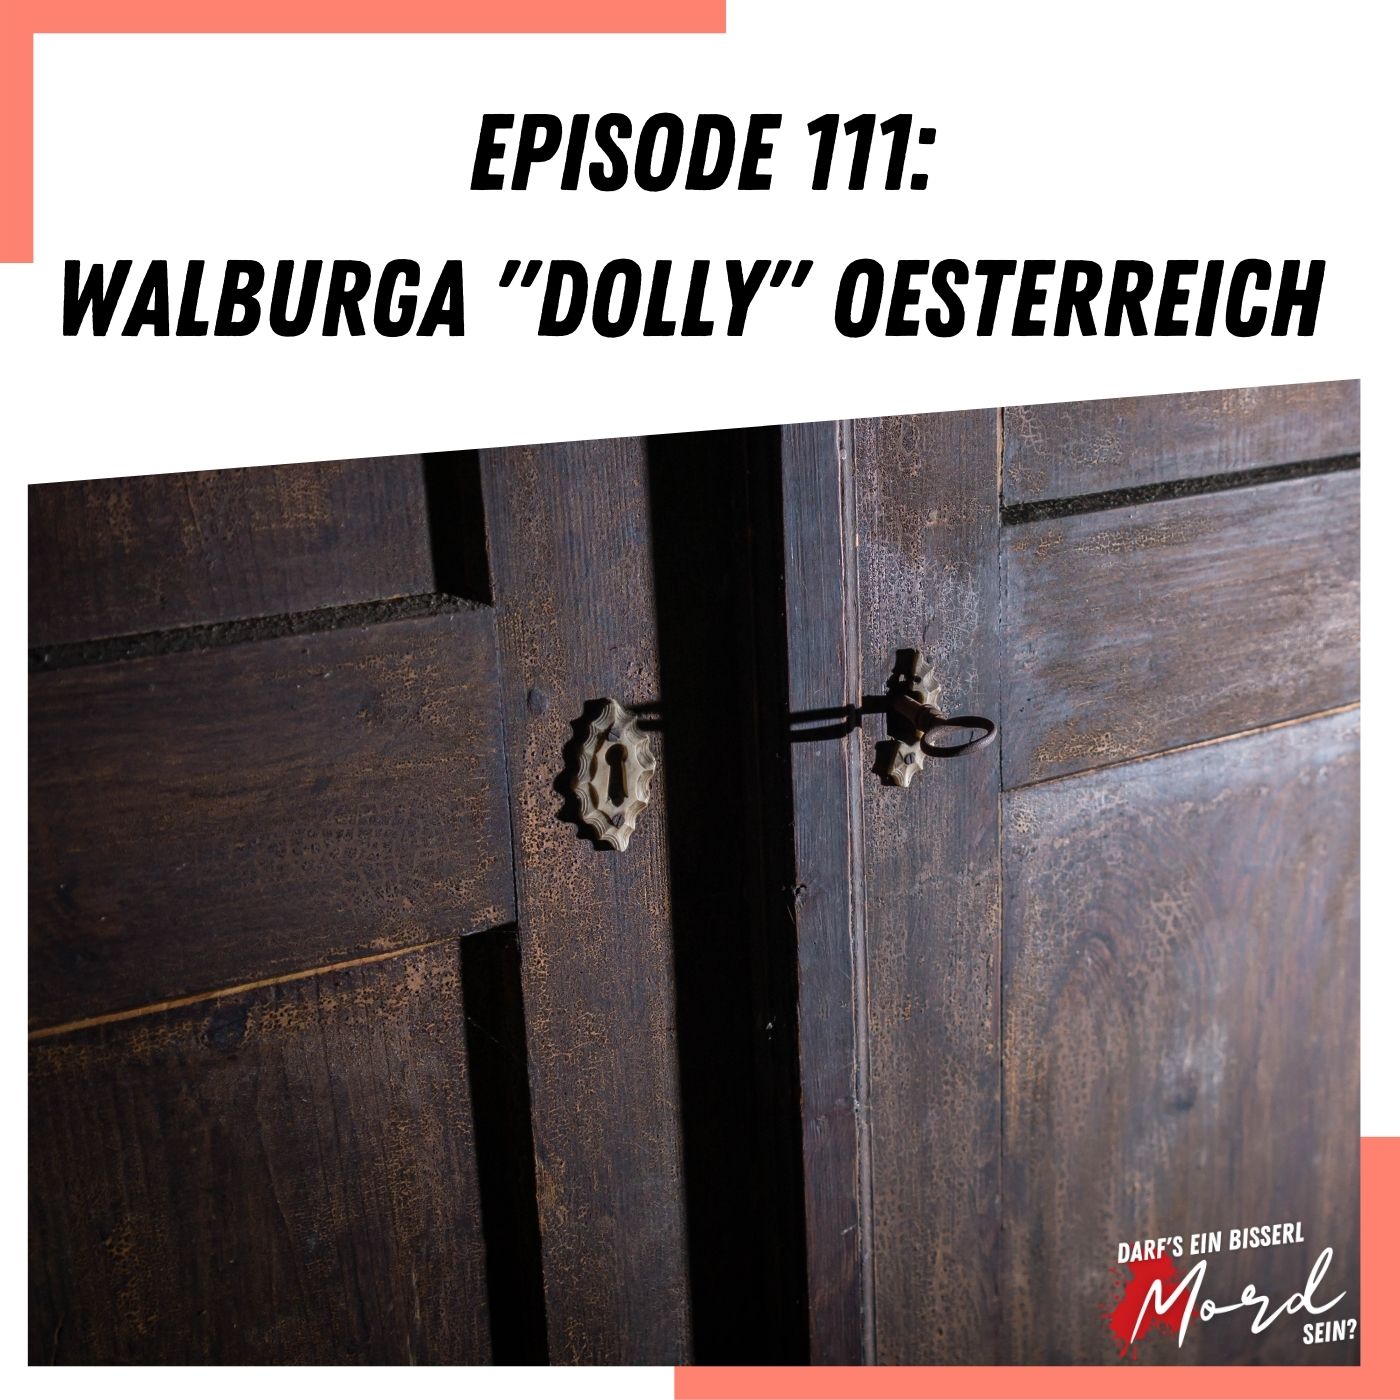 Episode 111: Walburga "Dolly" Oesterreich